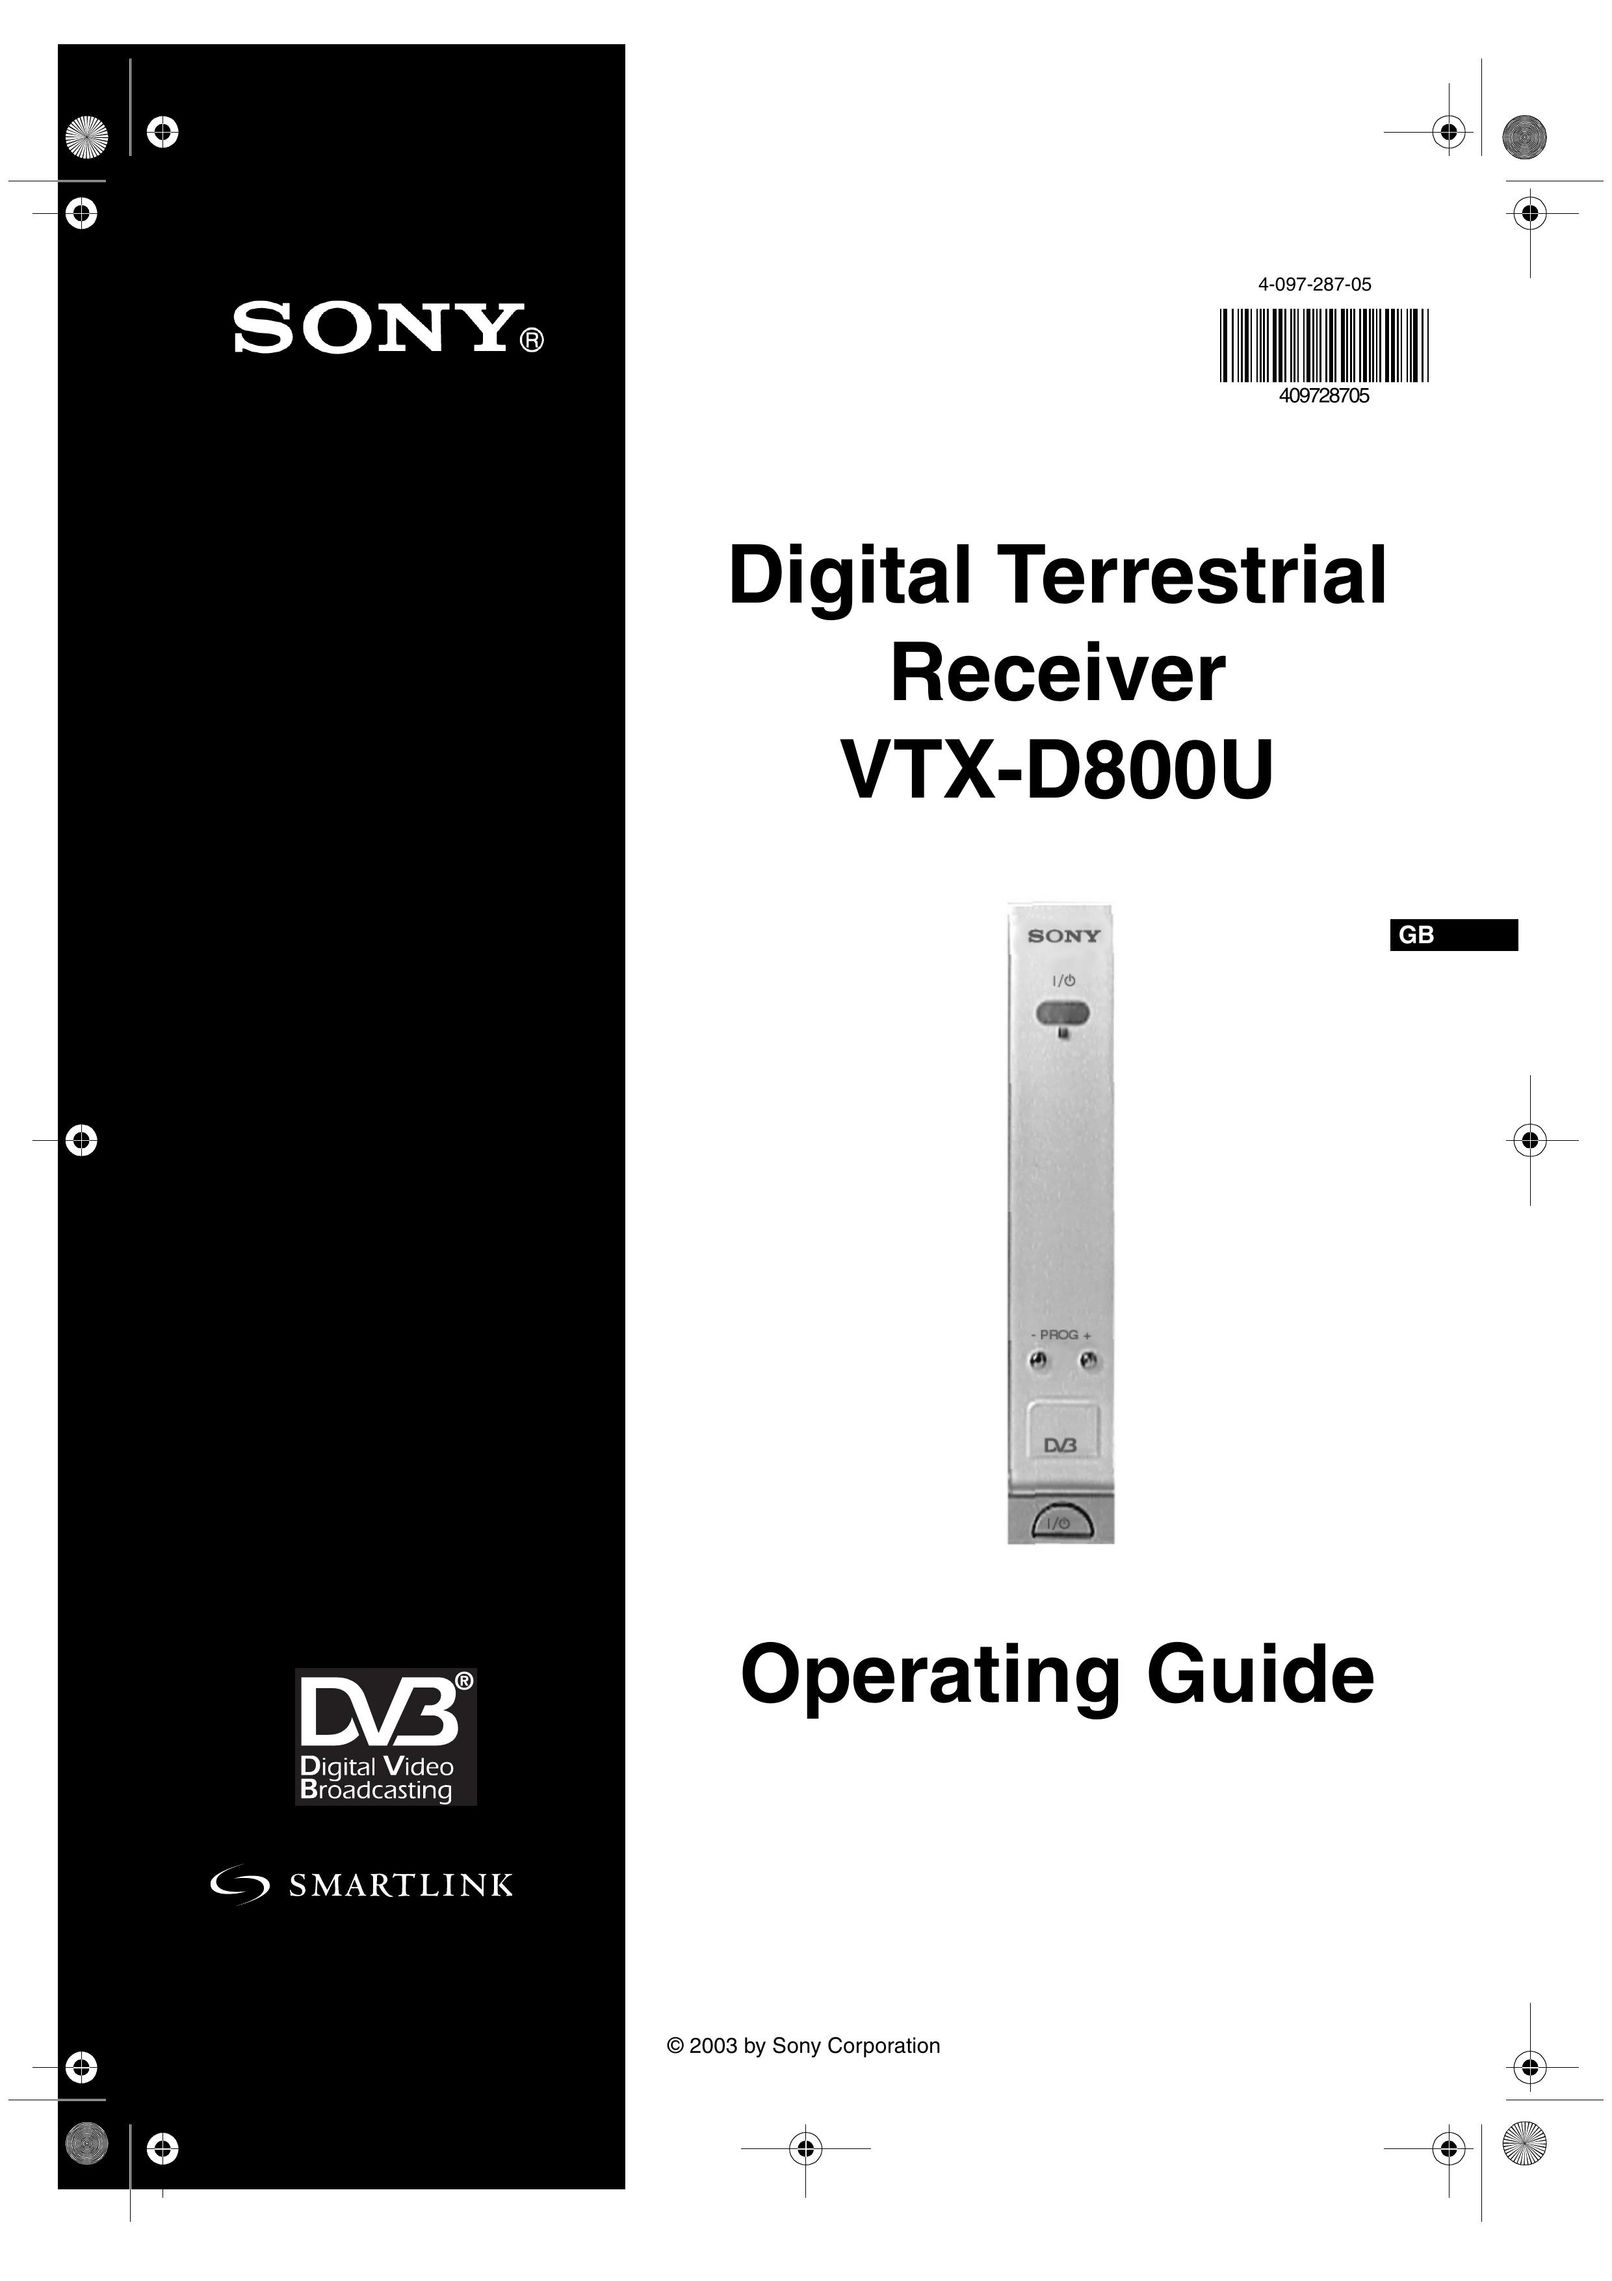 Sony VTX-D800U TV Receiver User Manual